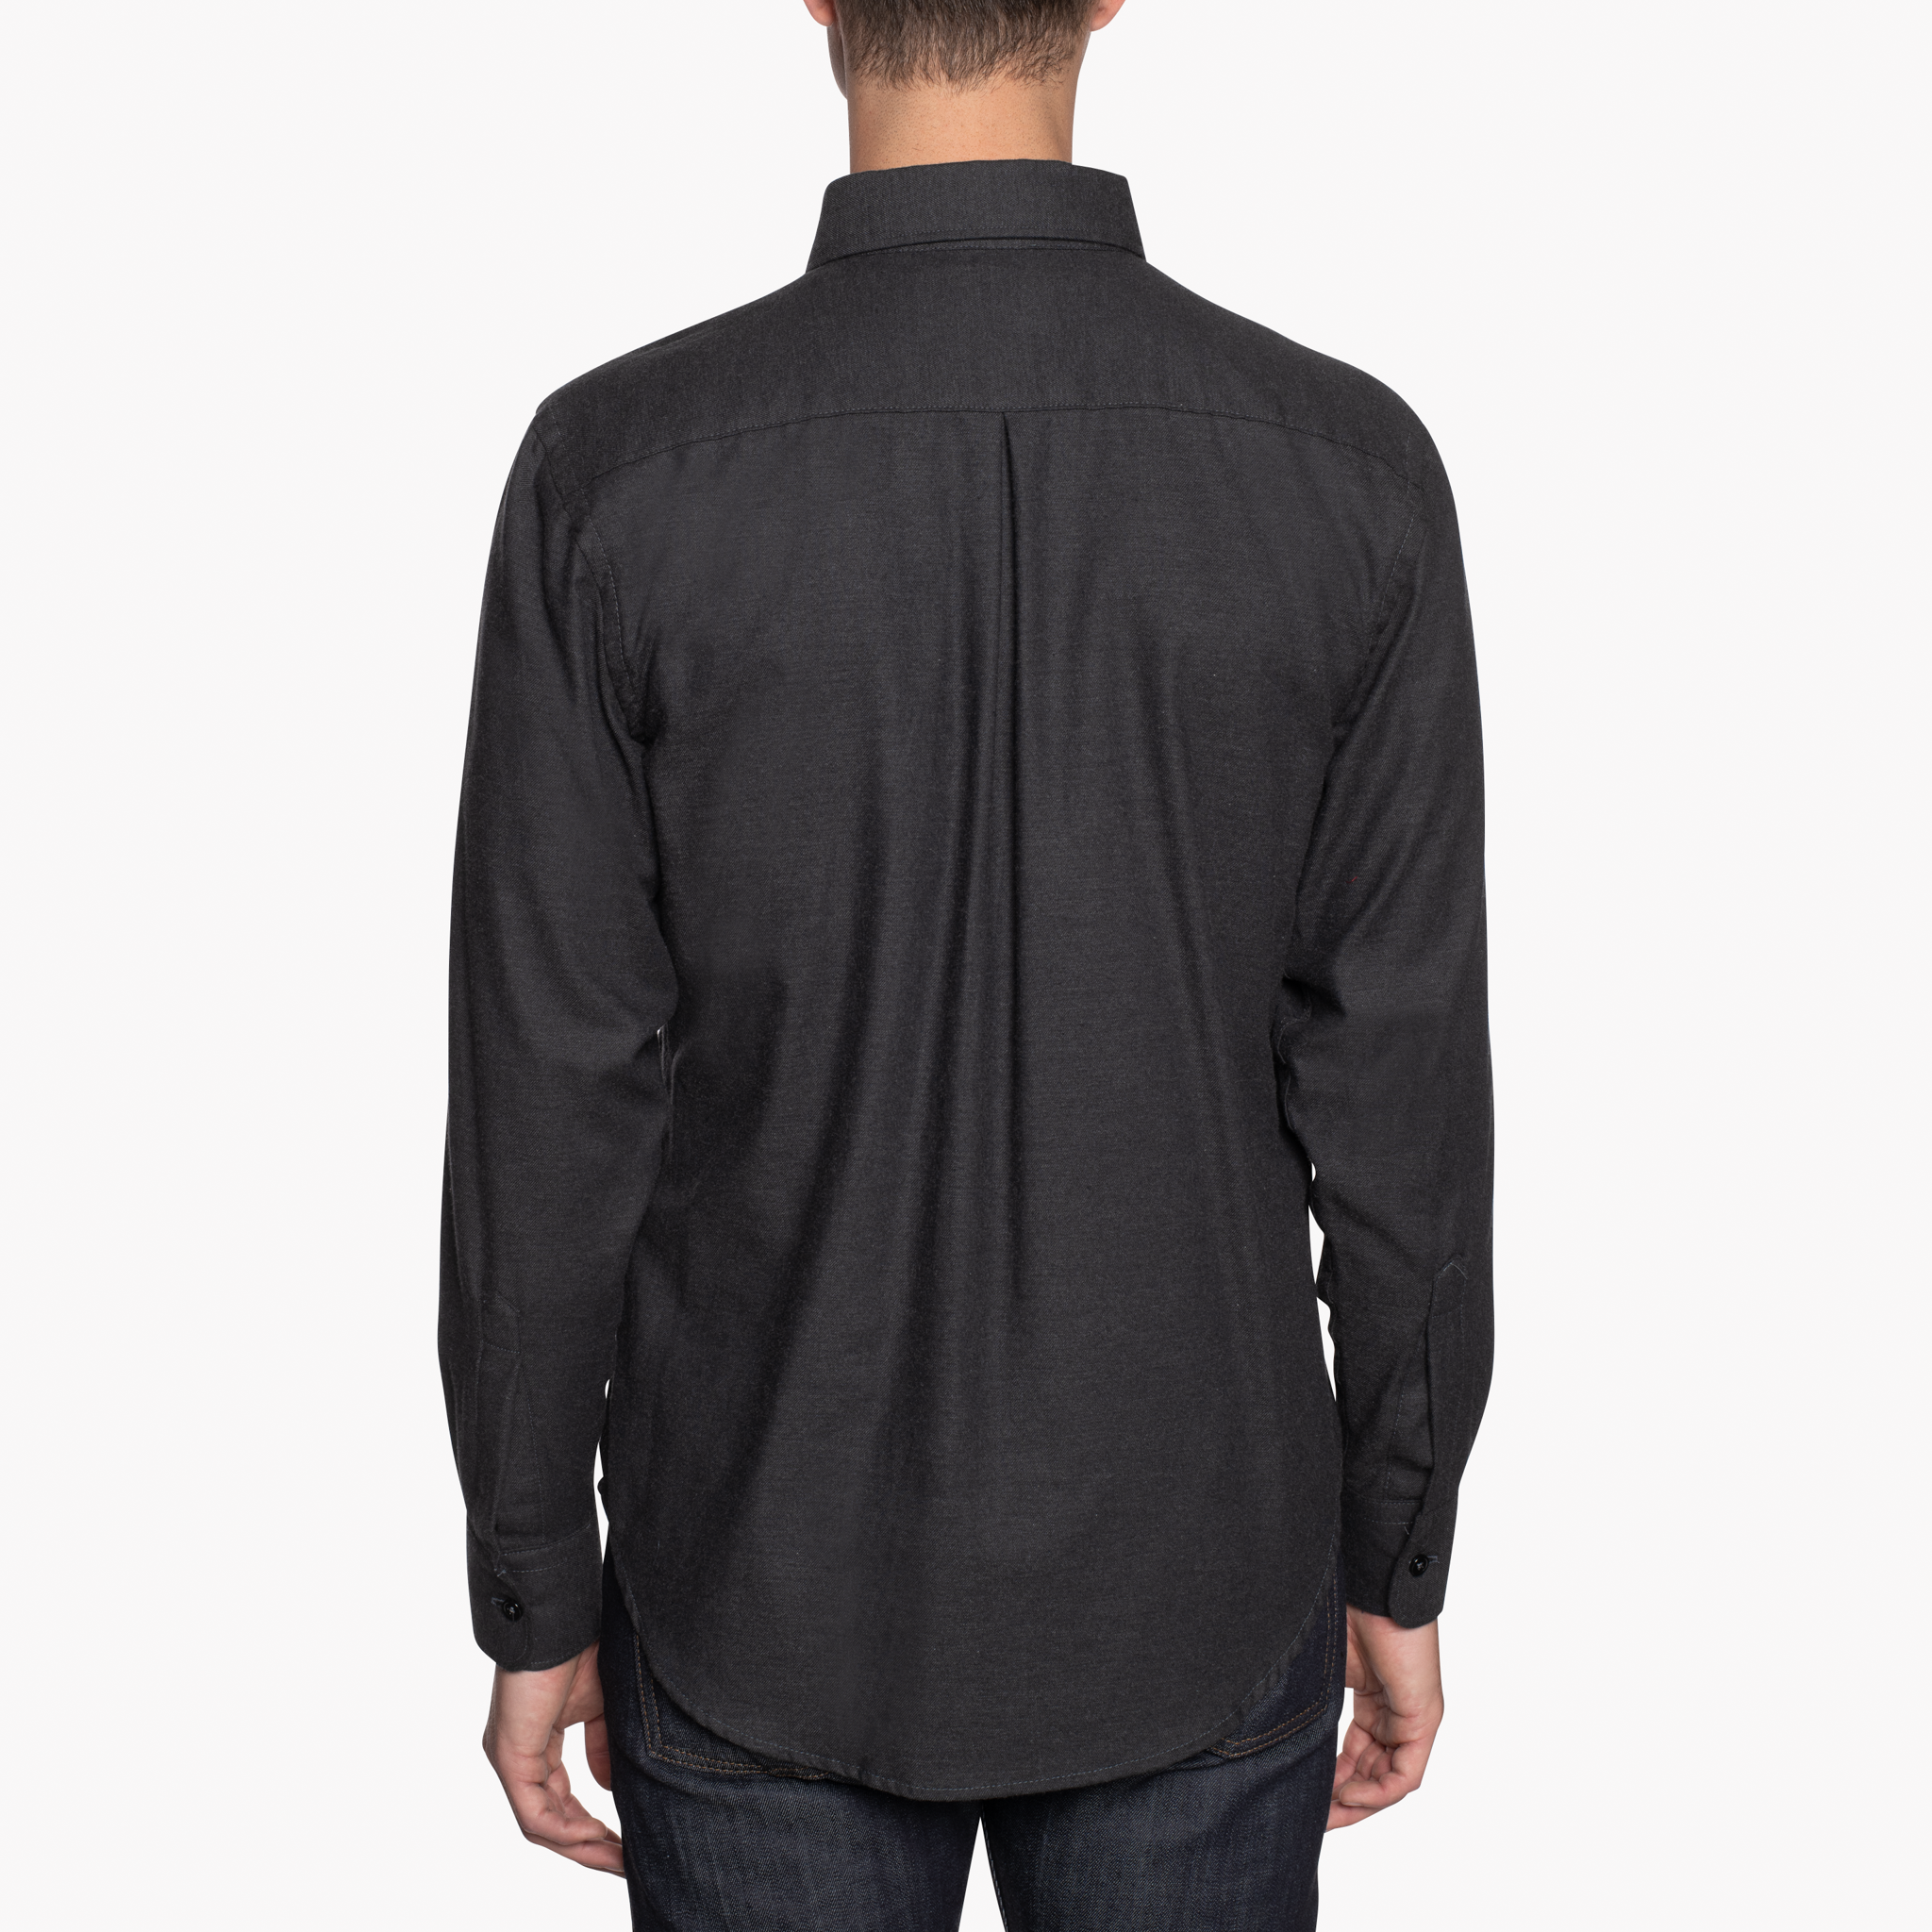  Easy Shirt - Soft Twill - Charcoal - back 